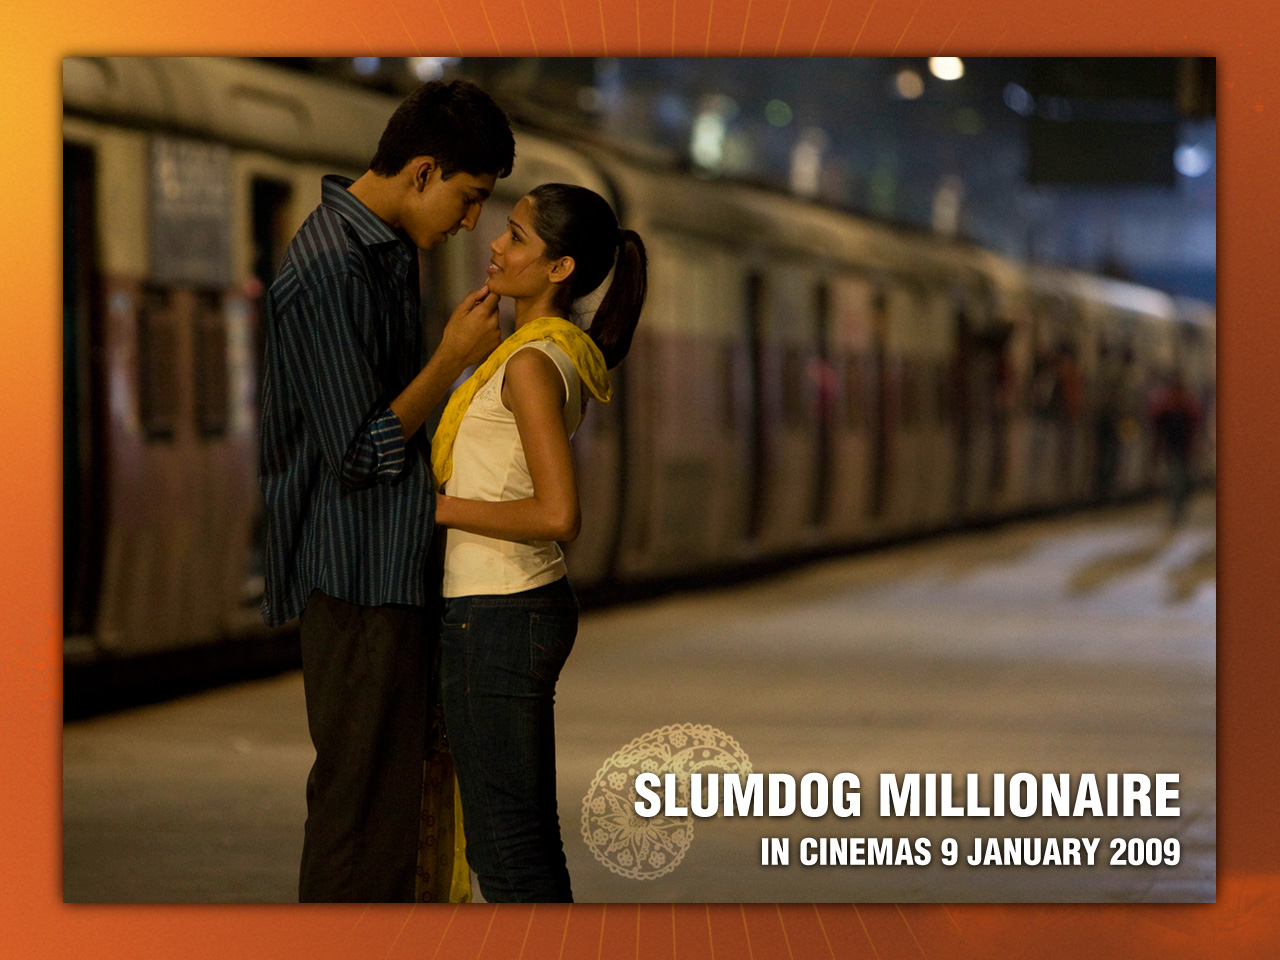 Previous, Movies - Films S - Slumdog Millionaire wallpaper